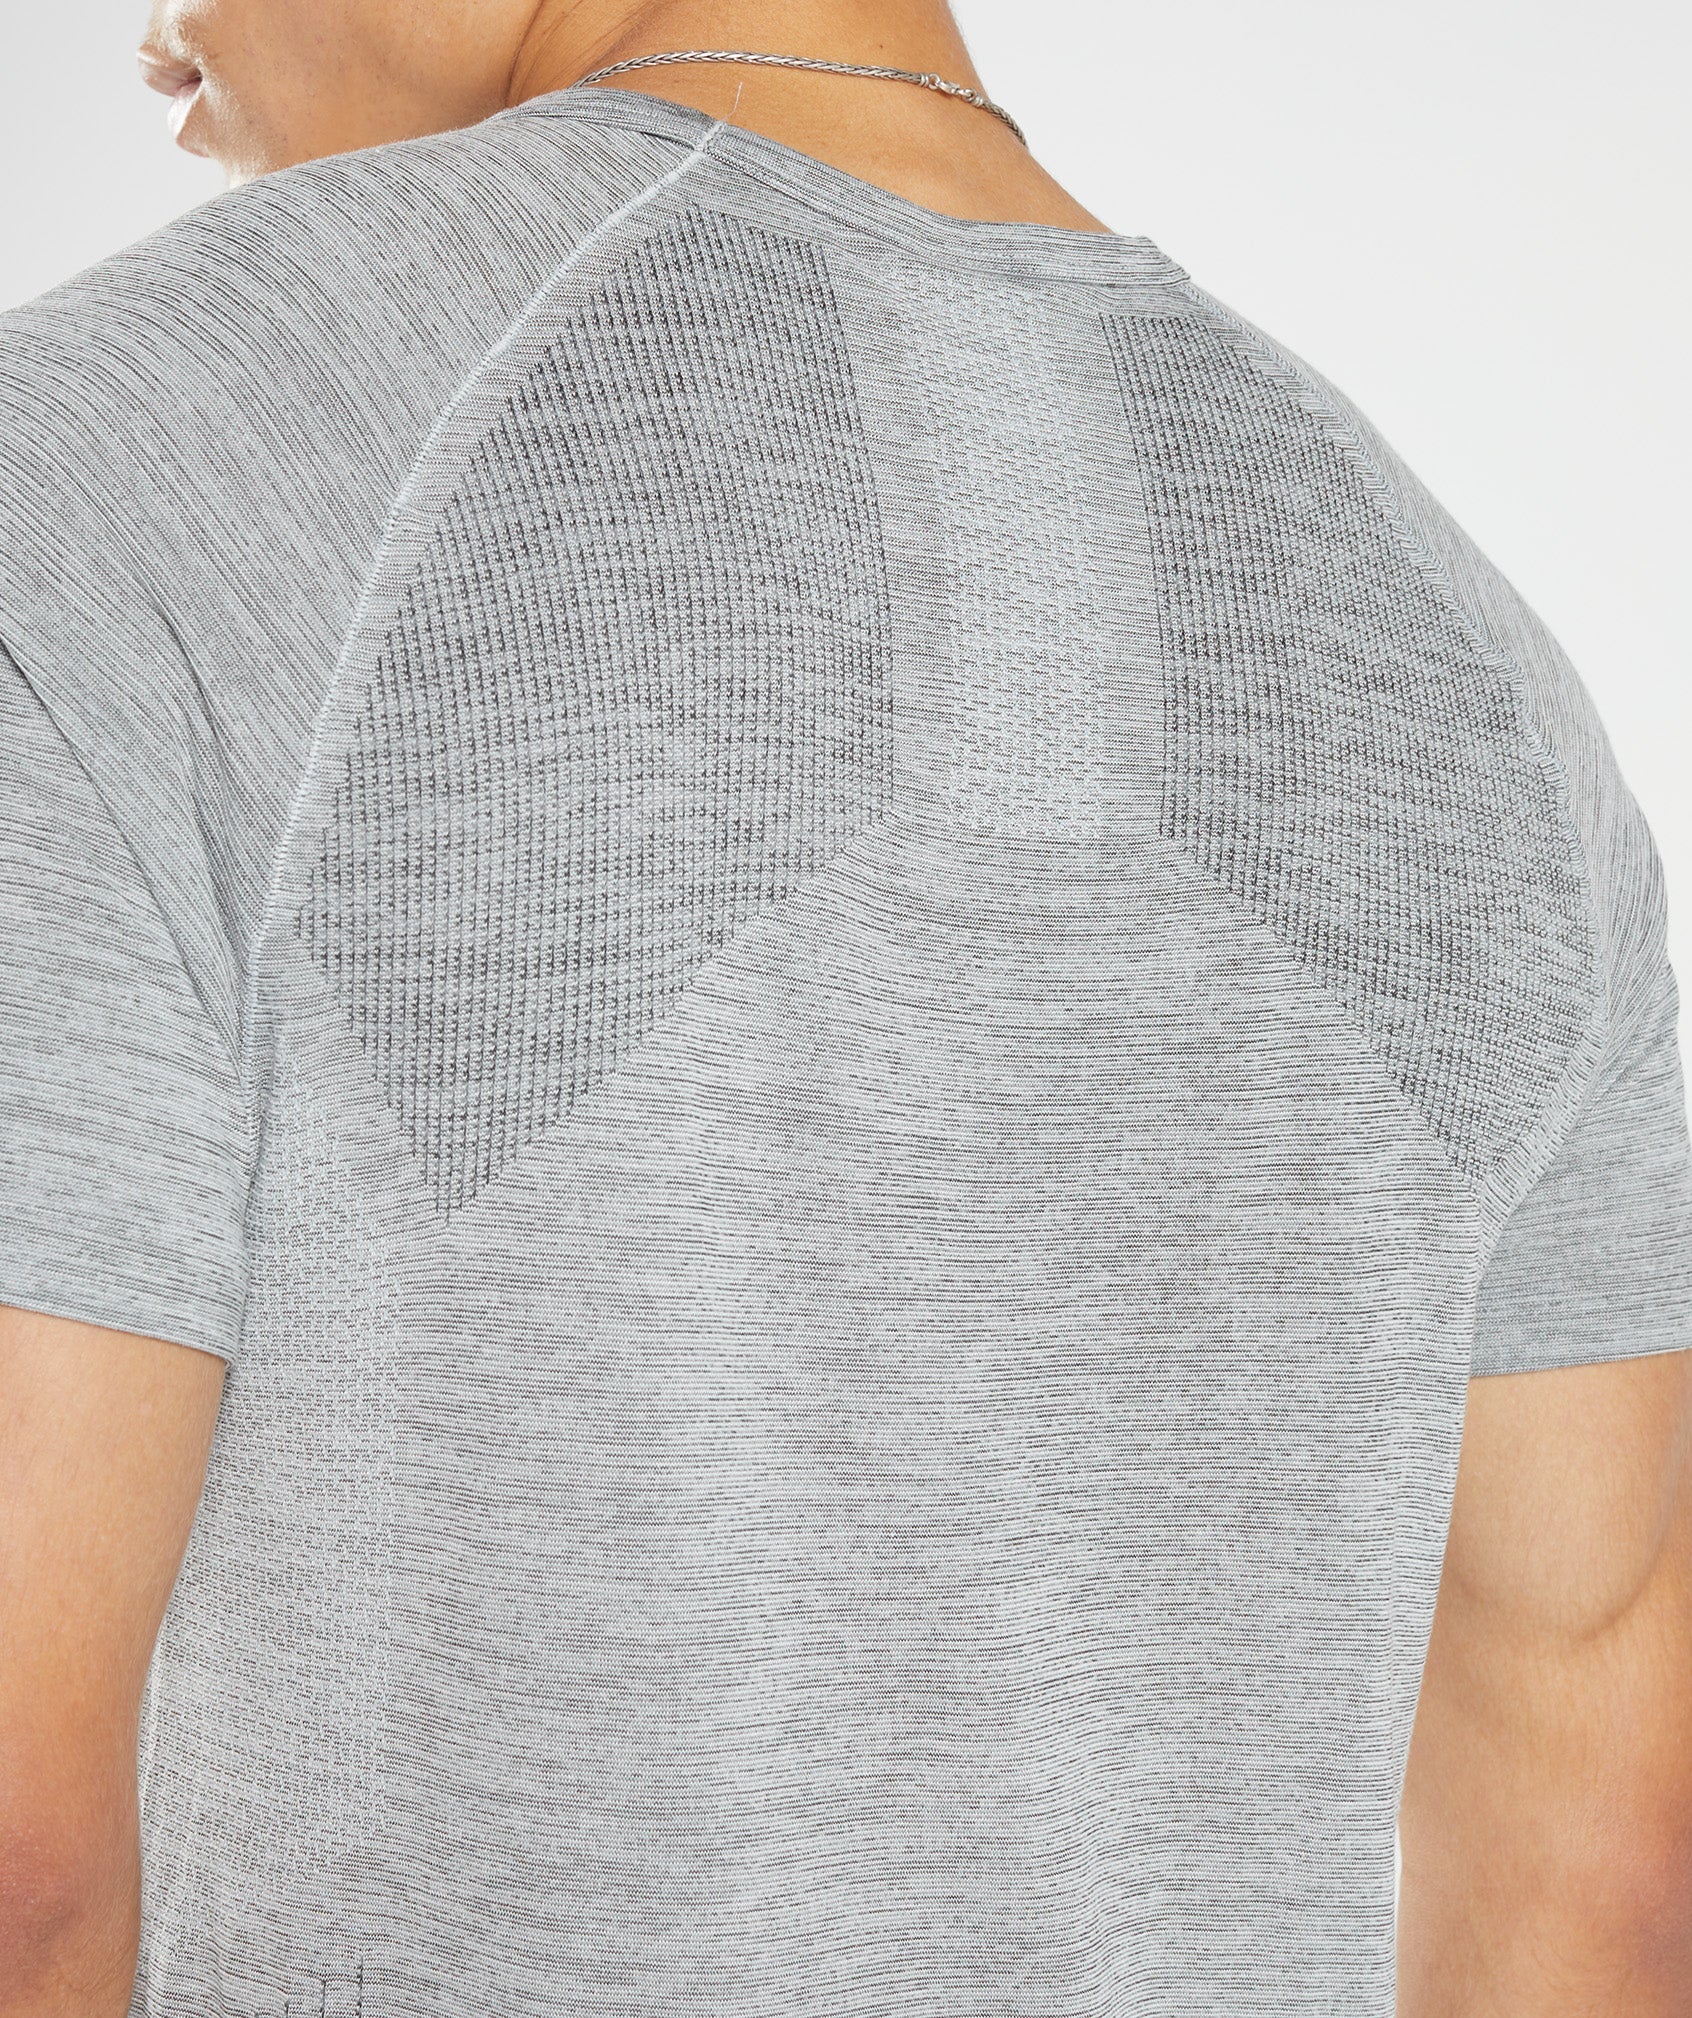 Retake Seamless T-Shirt in Light Grey/Black Marl - view 4